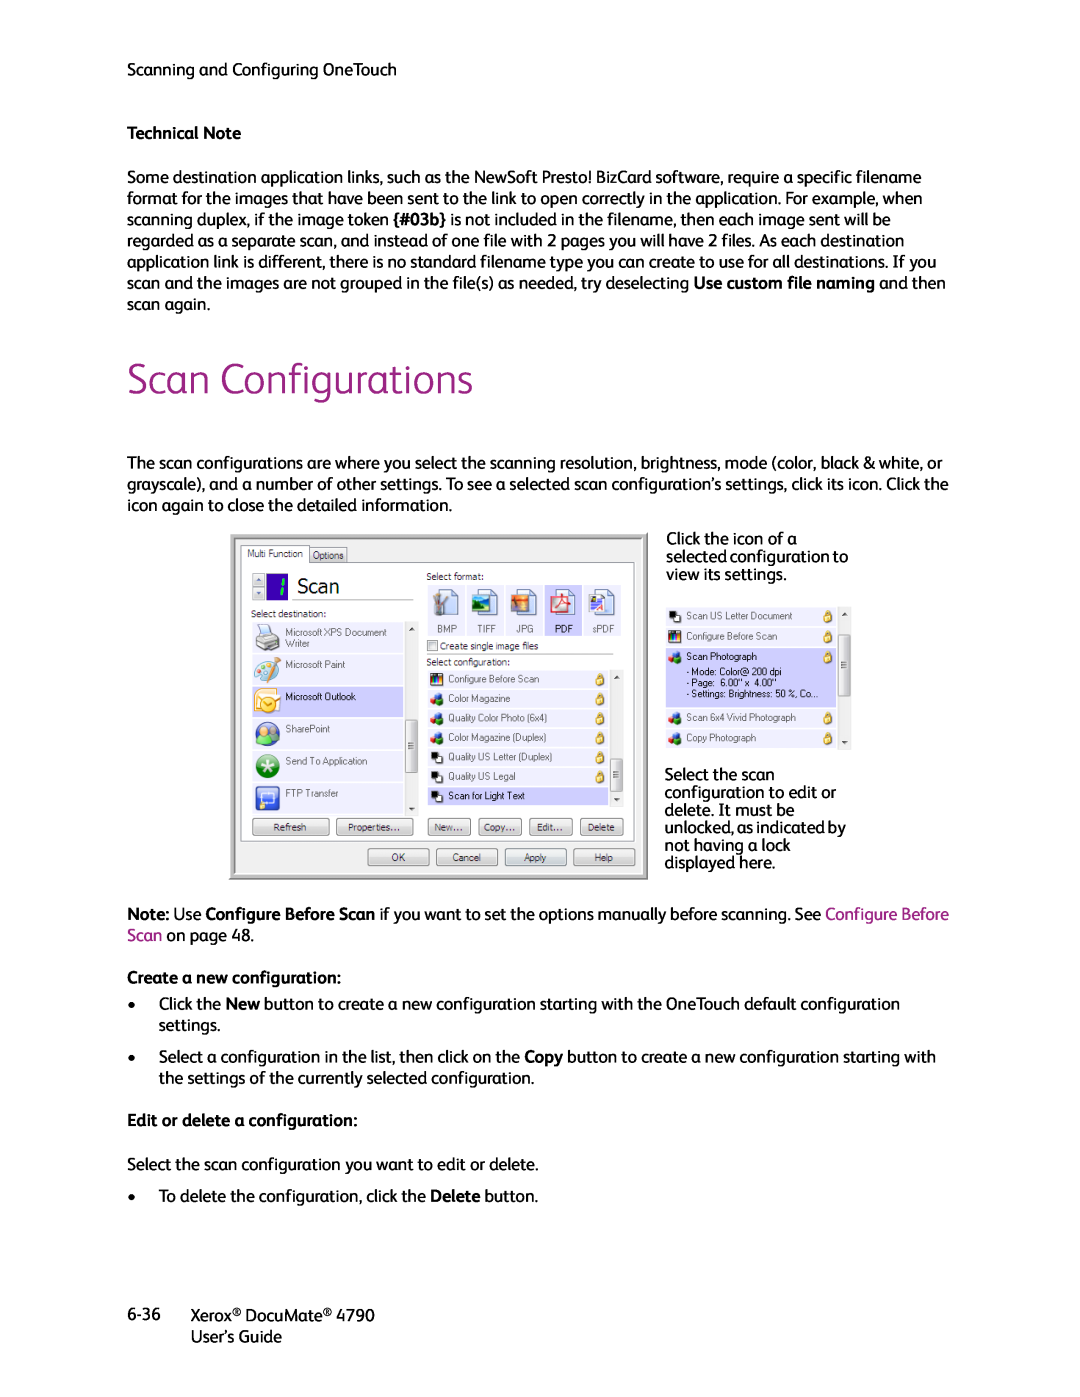 Xerox xerox documate manual Scan Configurations, Technical Note, Create a new configuration, Edit or delete a configuration 